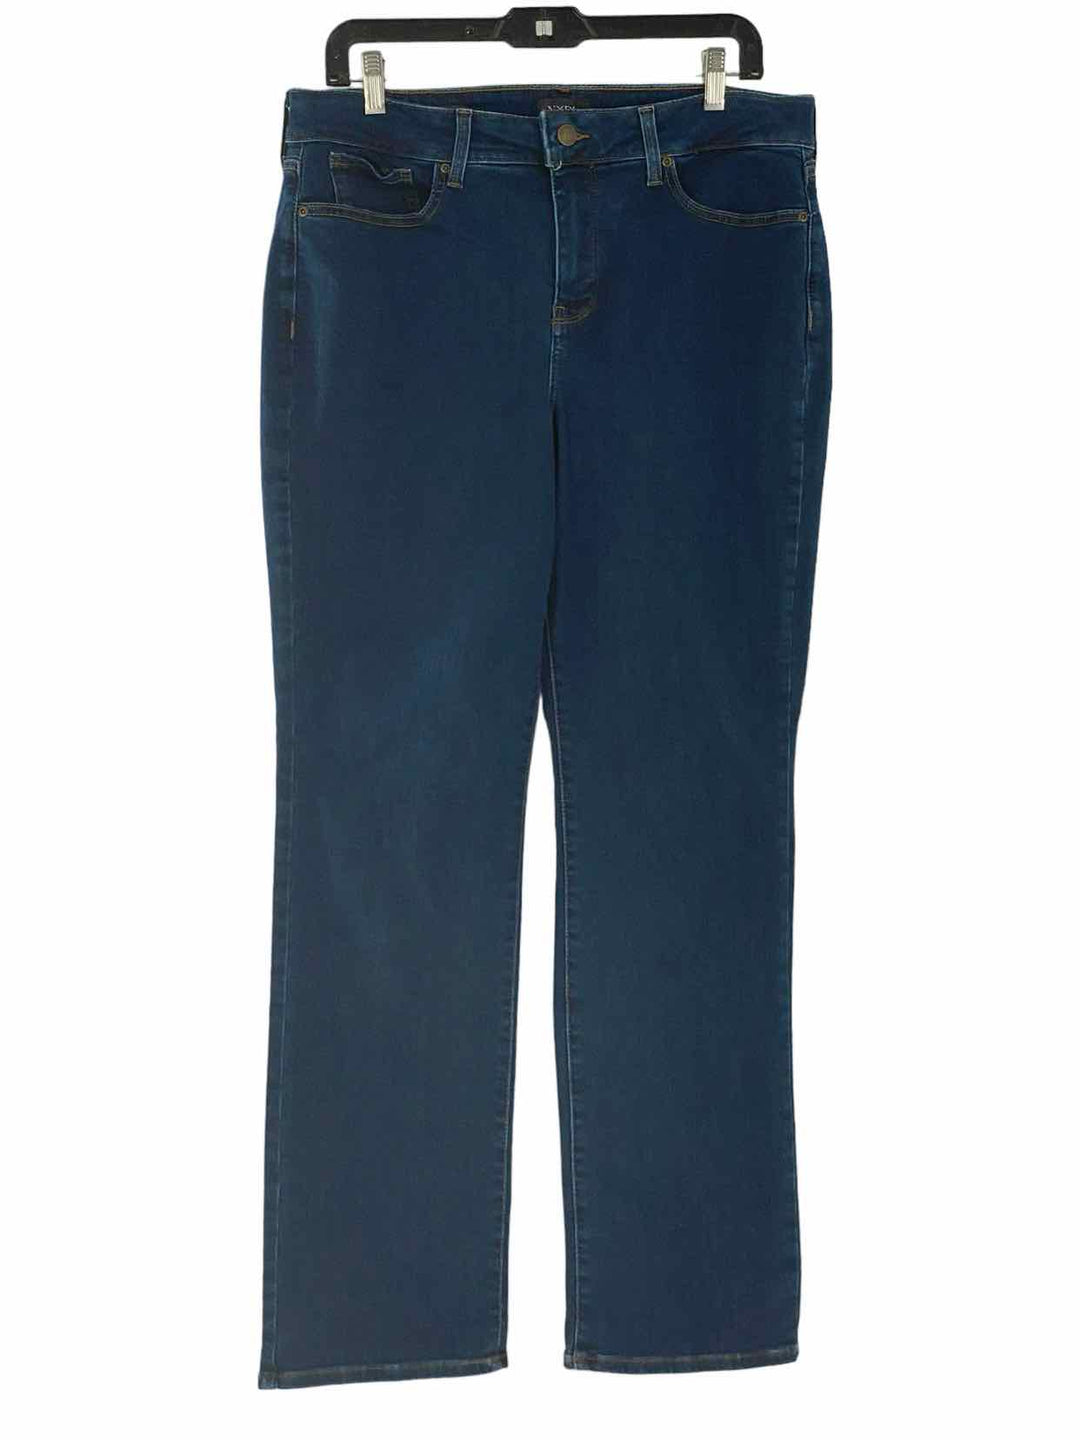 NYDJ Size 14 Blue Jeans